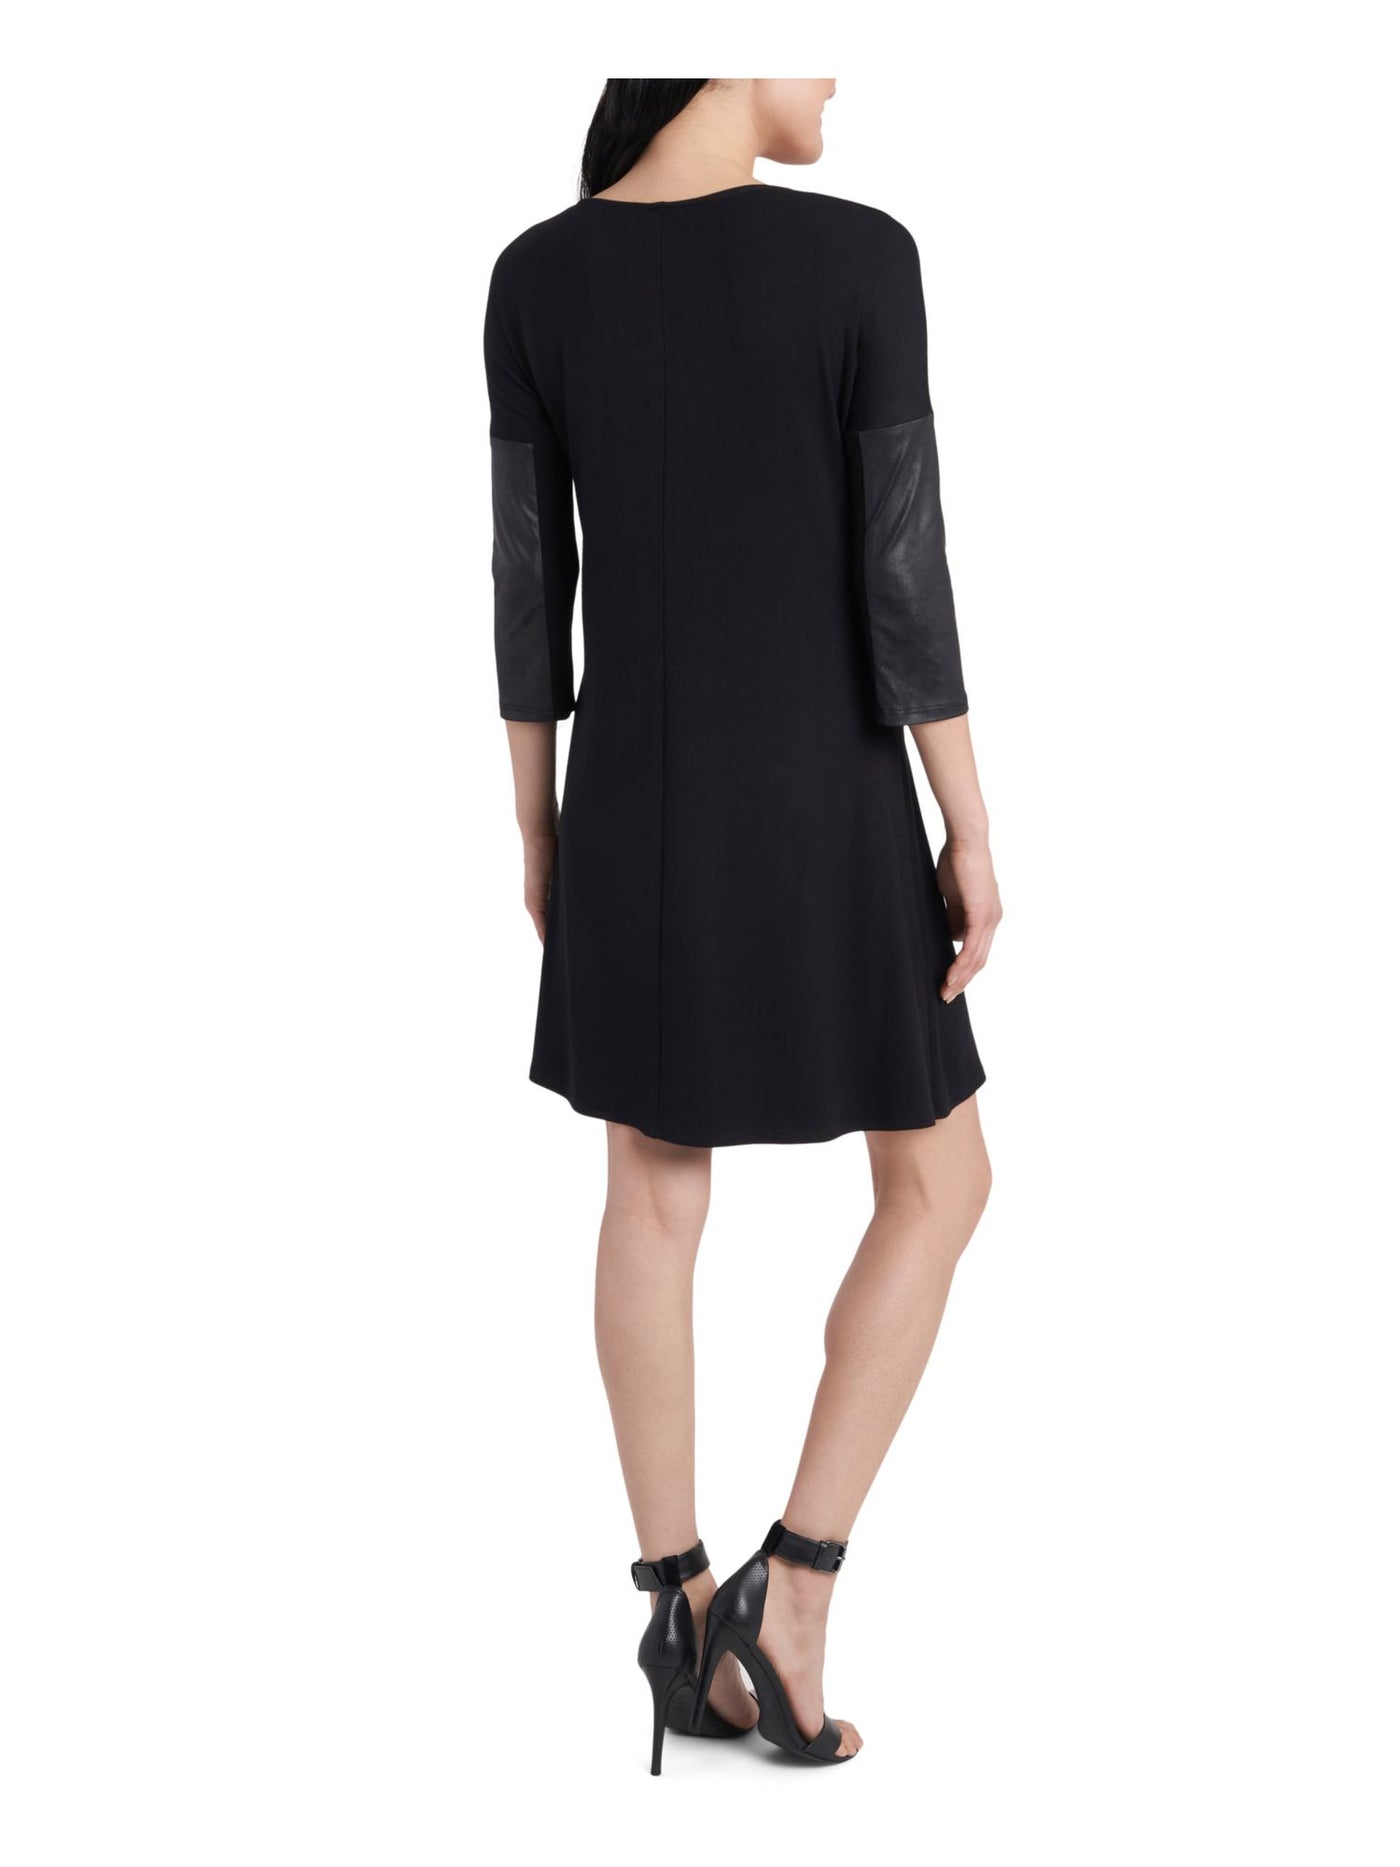 MSK Womens Black Faux Leather 3/4 Sleeve Scoop Neck Short Shift Dress M